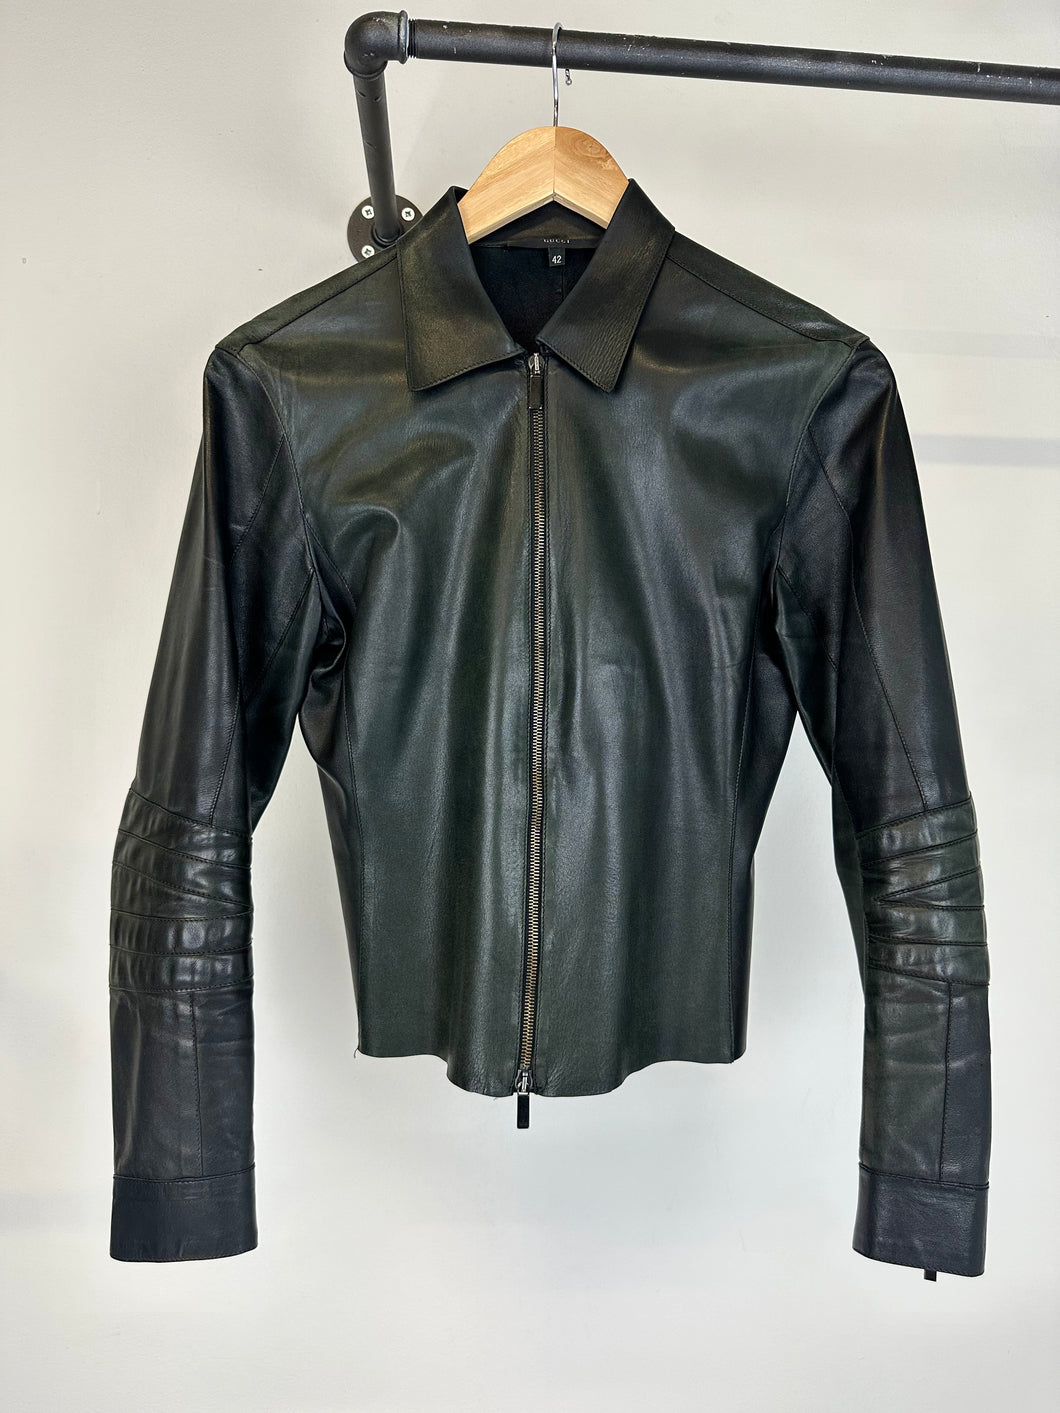 FW1999 Gucci Tom Ford leather biker jacket